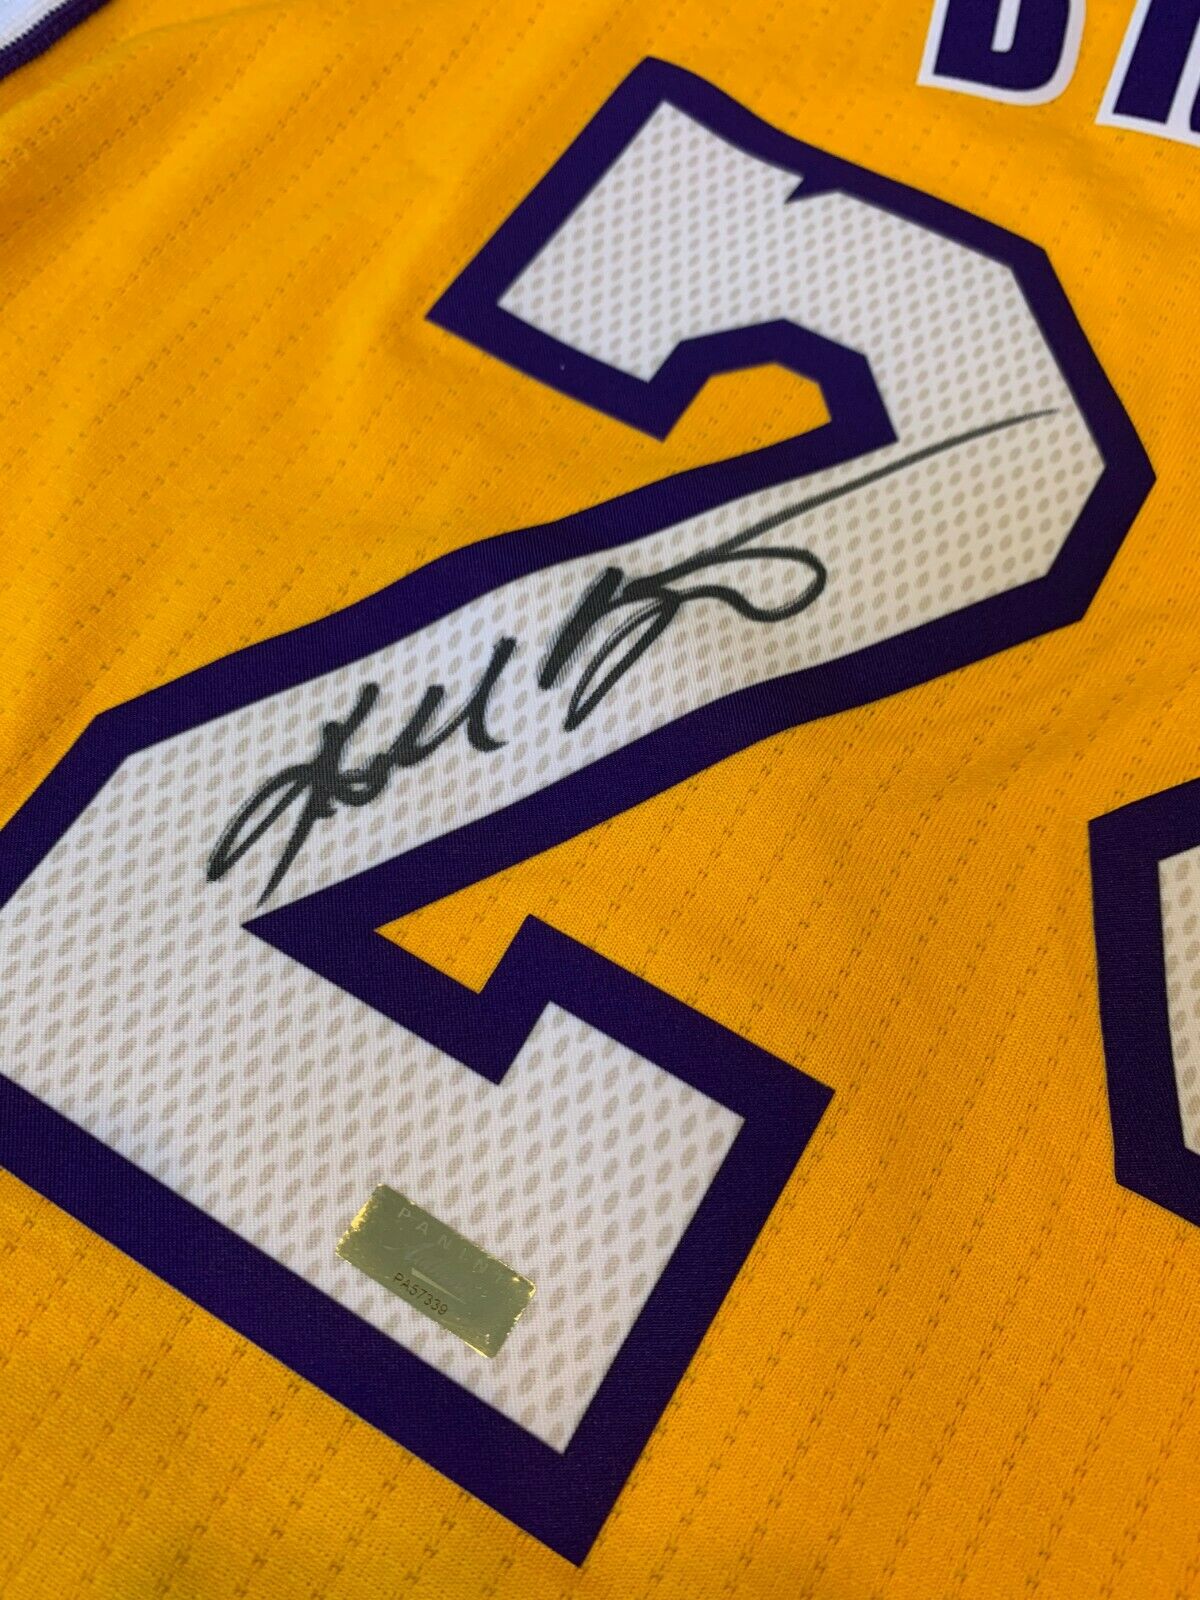 Kobe Bryant Signed Lakers Authentic Adidas Jersey (Panini COA)